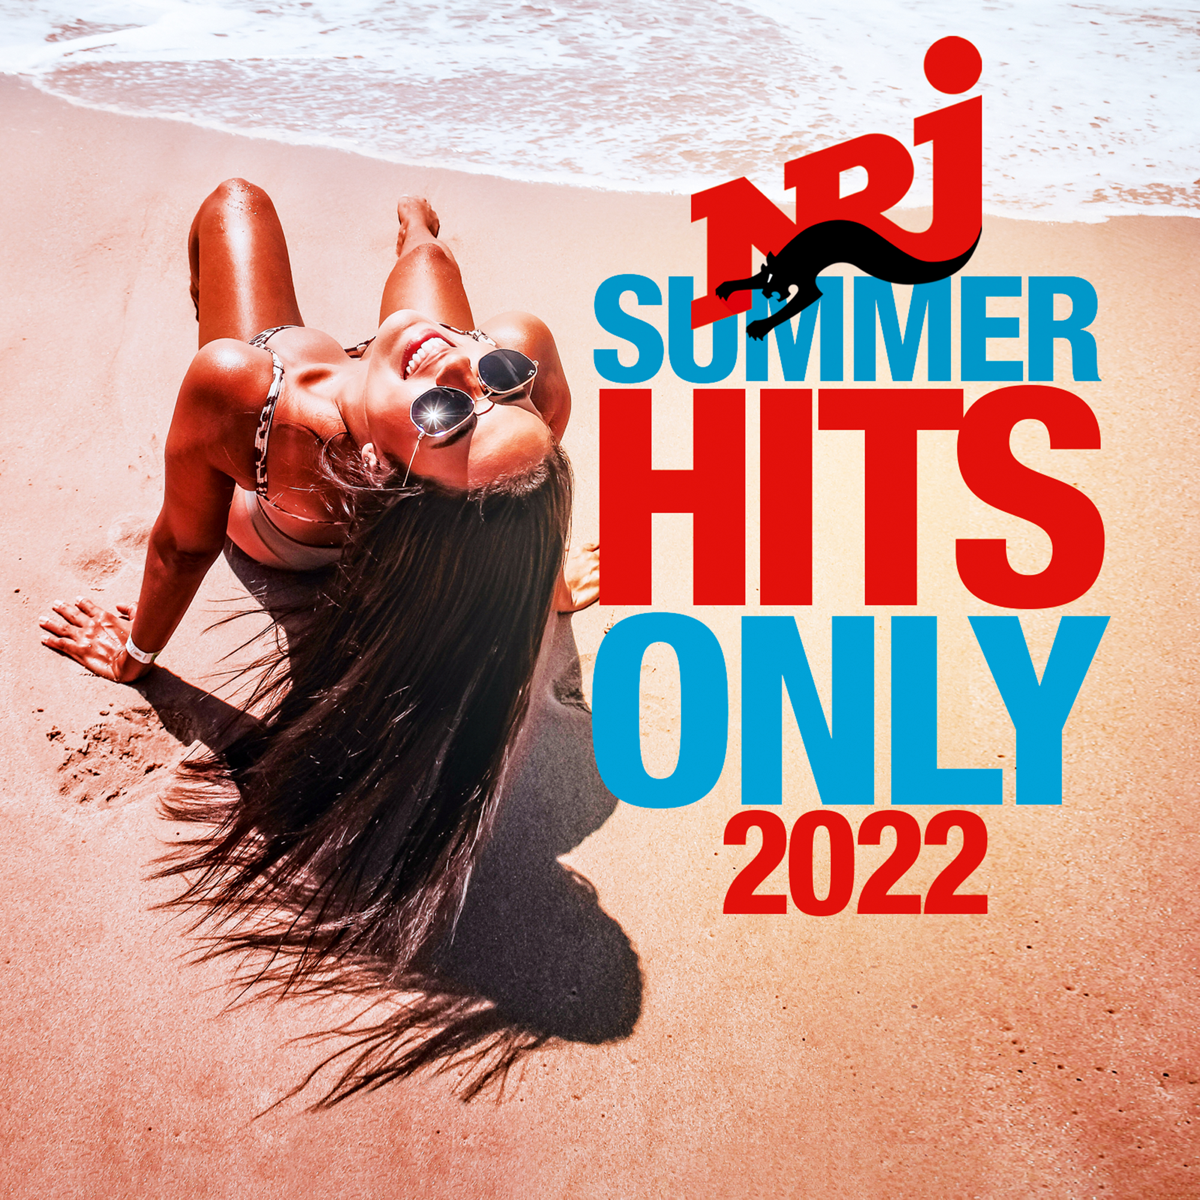 La goffa Lolita - NRJ Summer Hits Only 2022 - Morceau - iTunes France